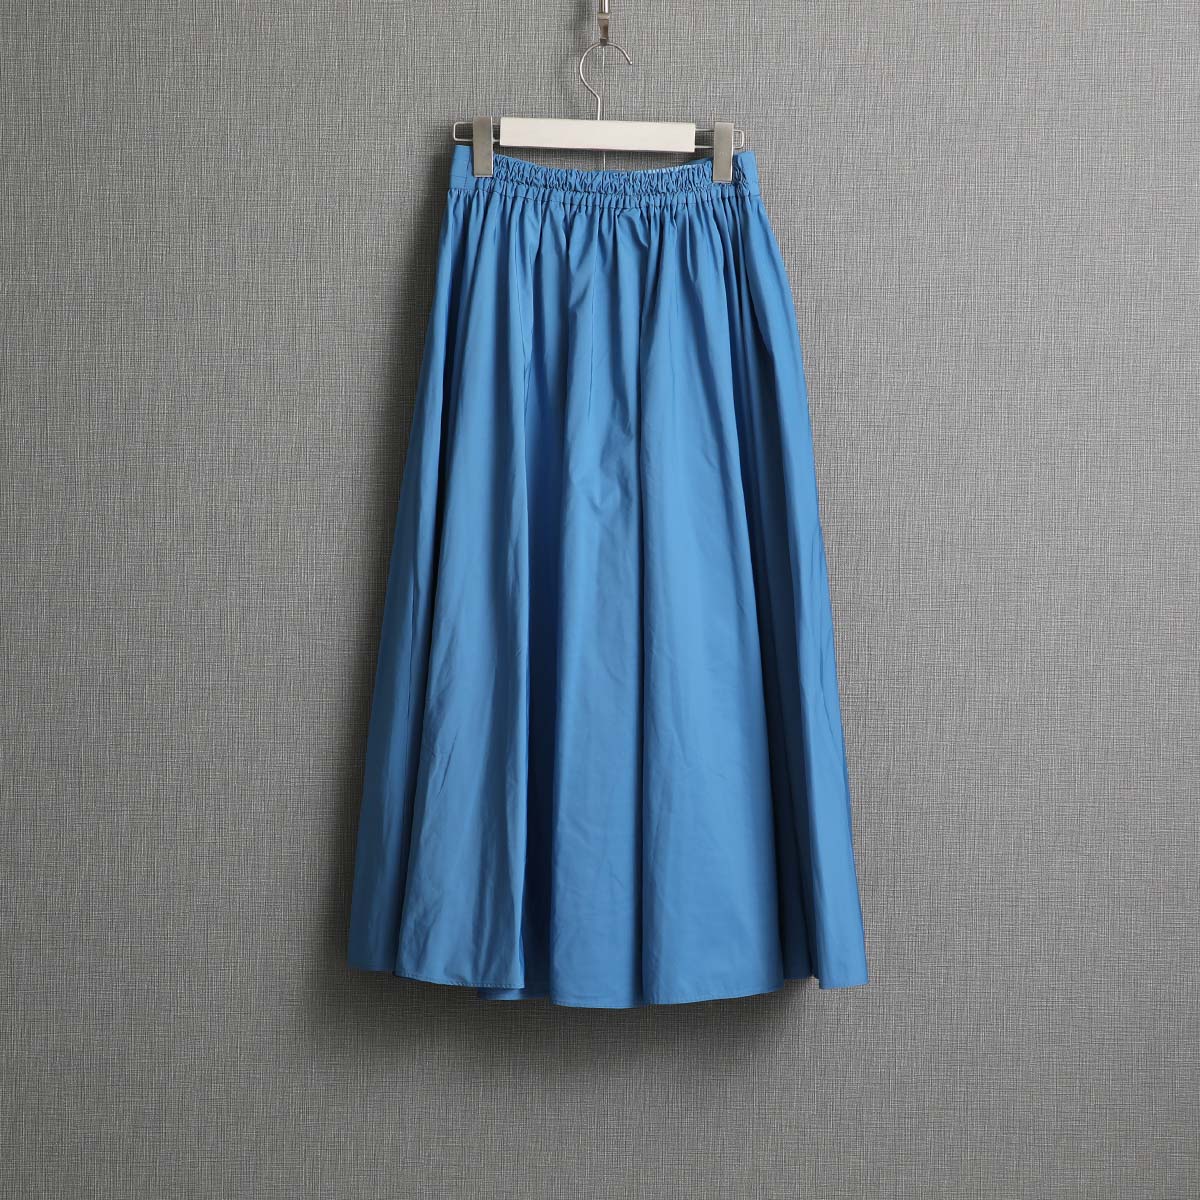 『Jewel taffeta』 flare skirt SAXE画像